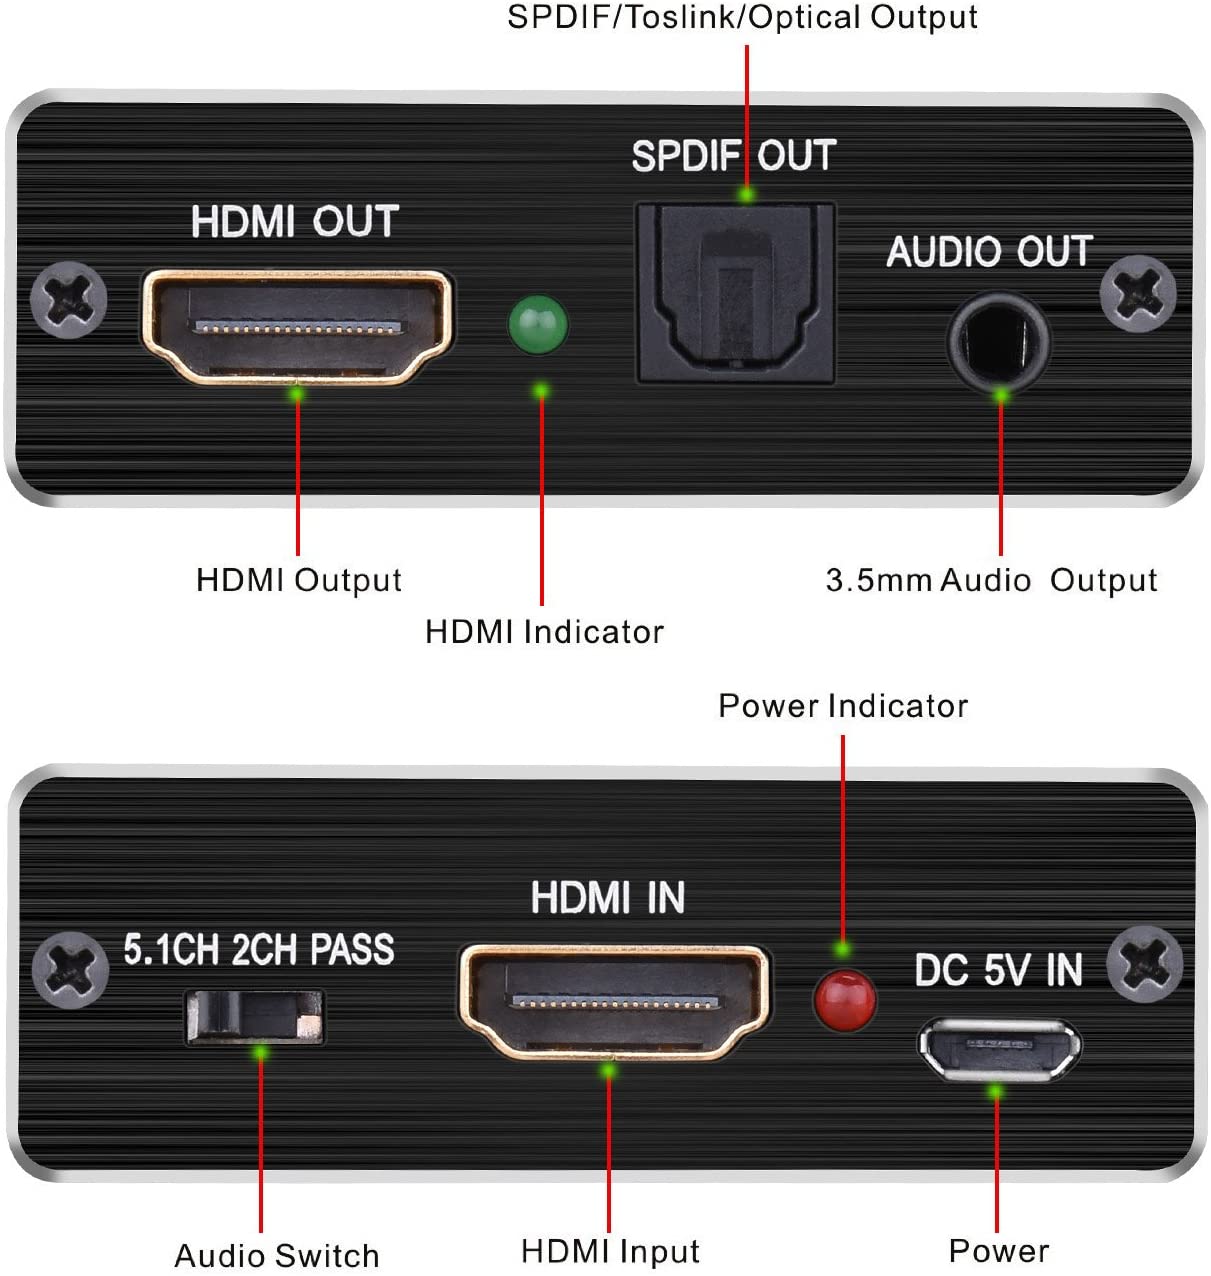 dvd audio extractor portable